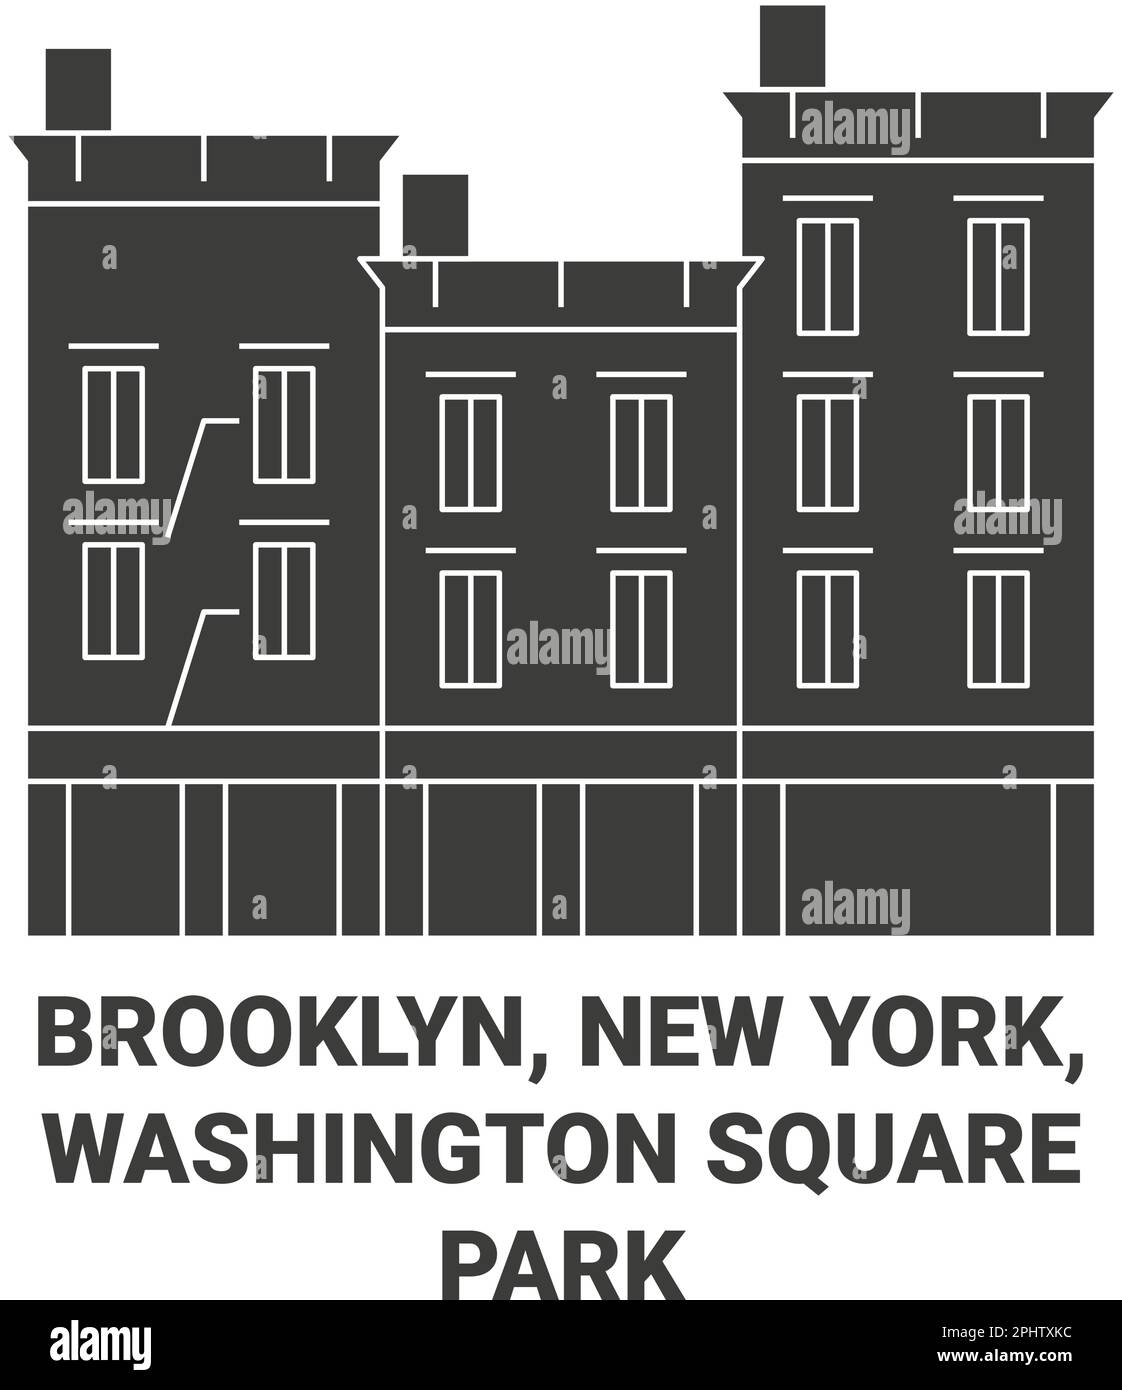 Vektorgrafik für Reisen in die USA, Brooklyn, New York, Washington Square Park Stock Vektor